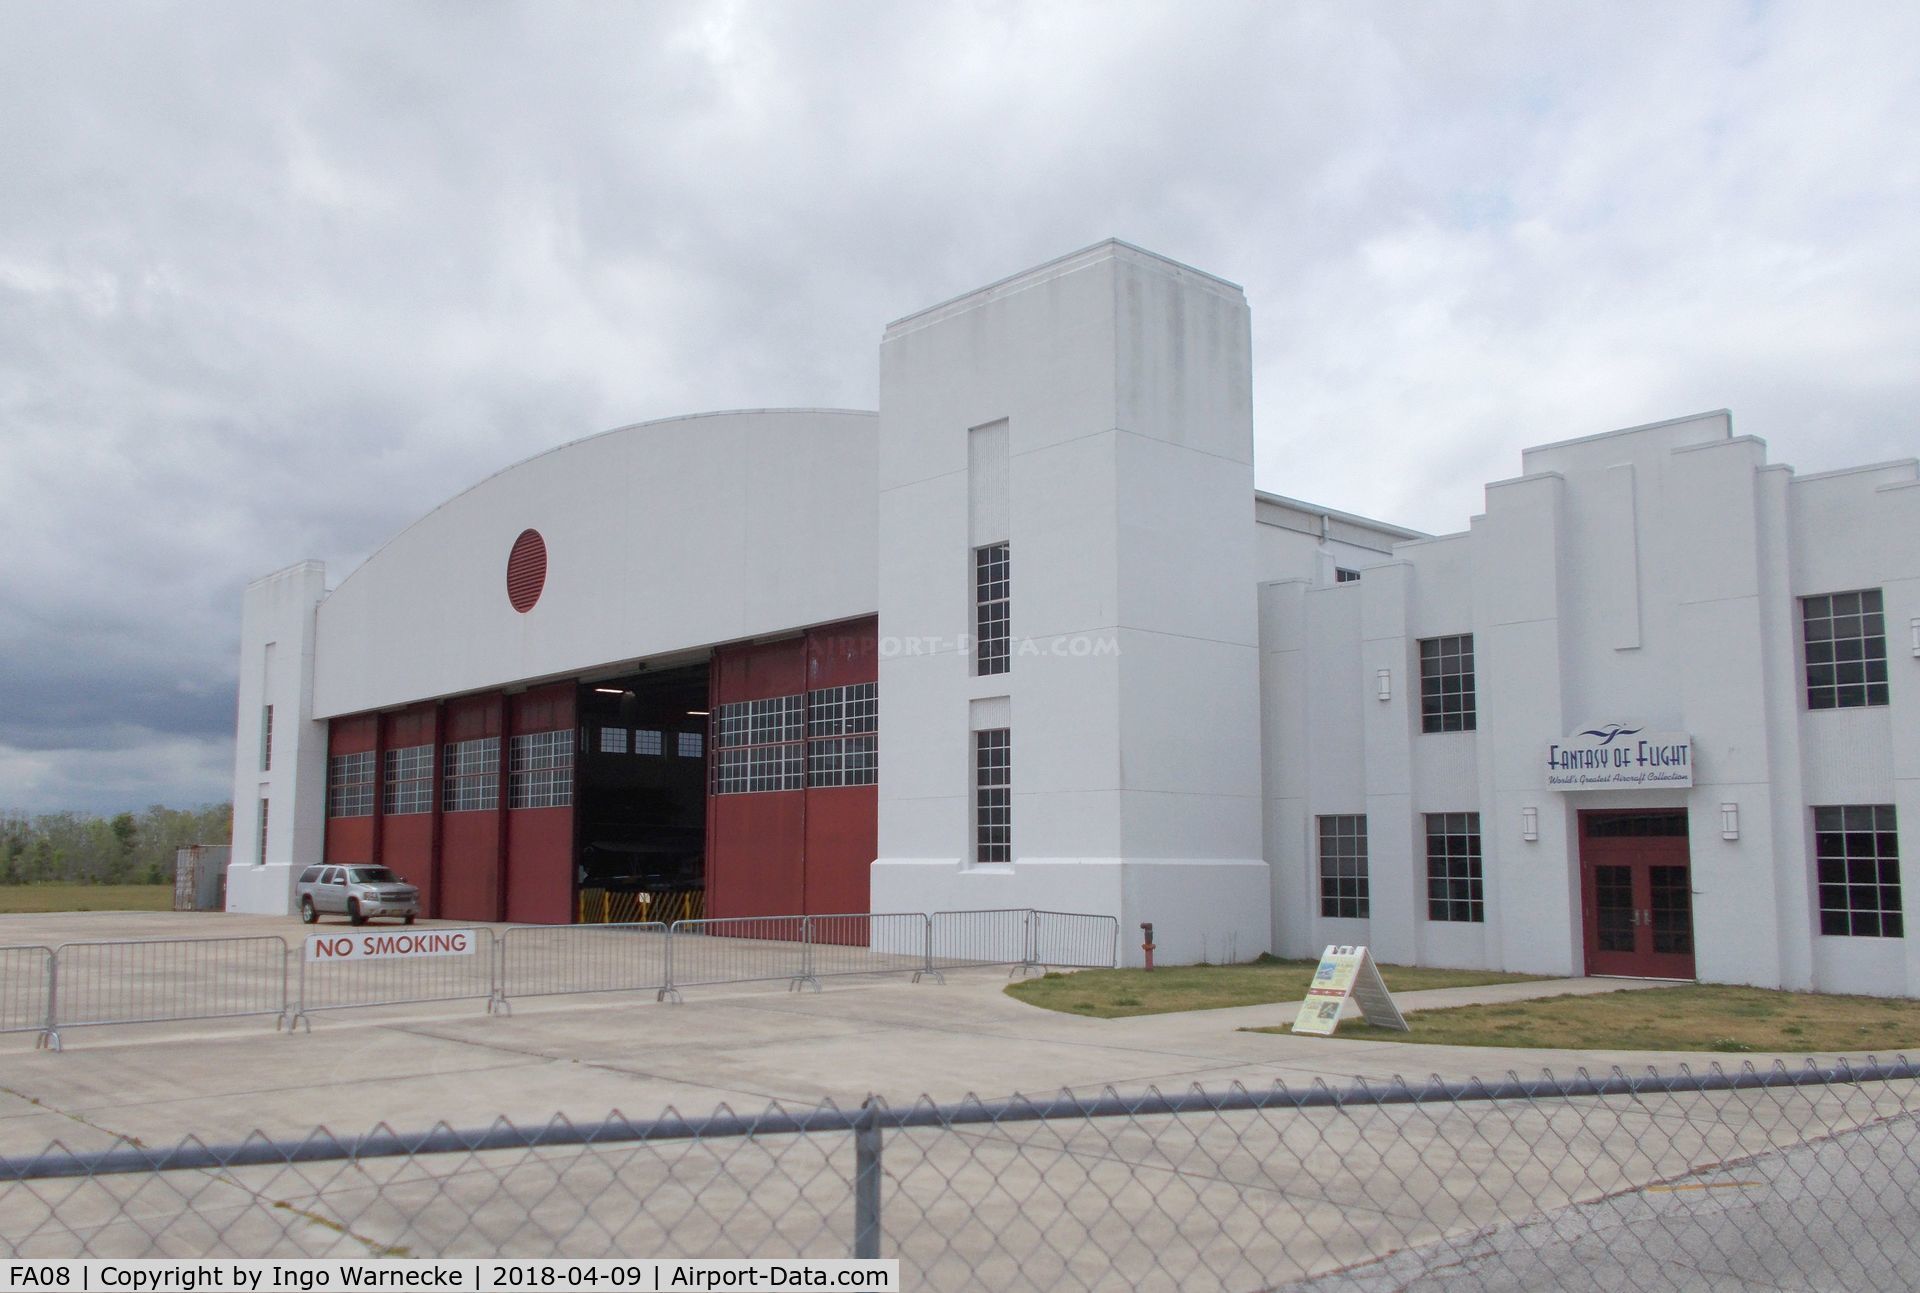 Orlampa Inc Airport (FA08) - hangar of the reduced temporary Fantasy of Flight Museum at Orlampa airport, Polk City FL